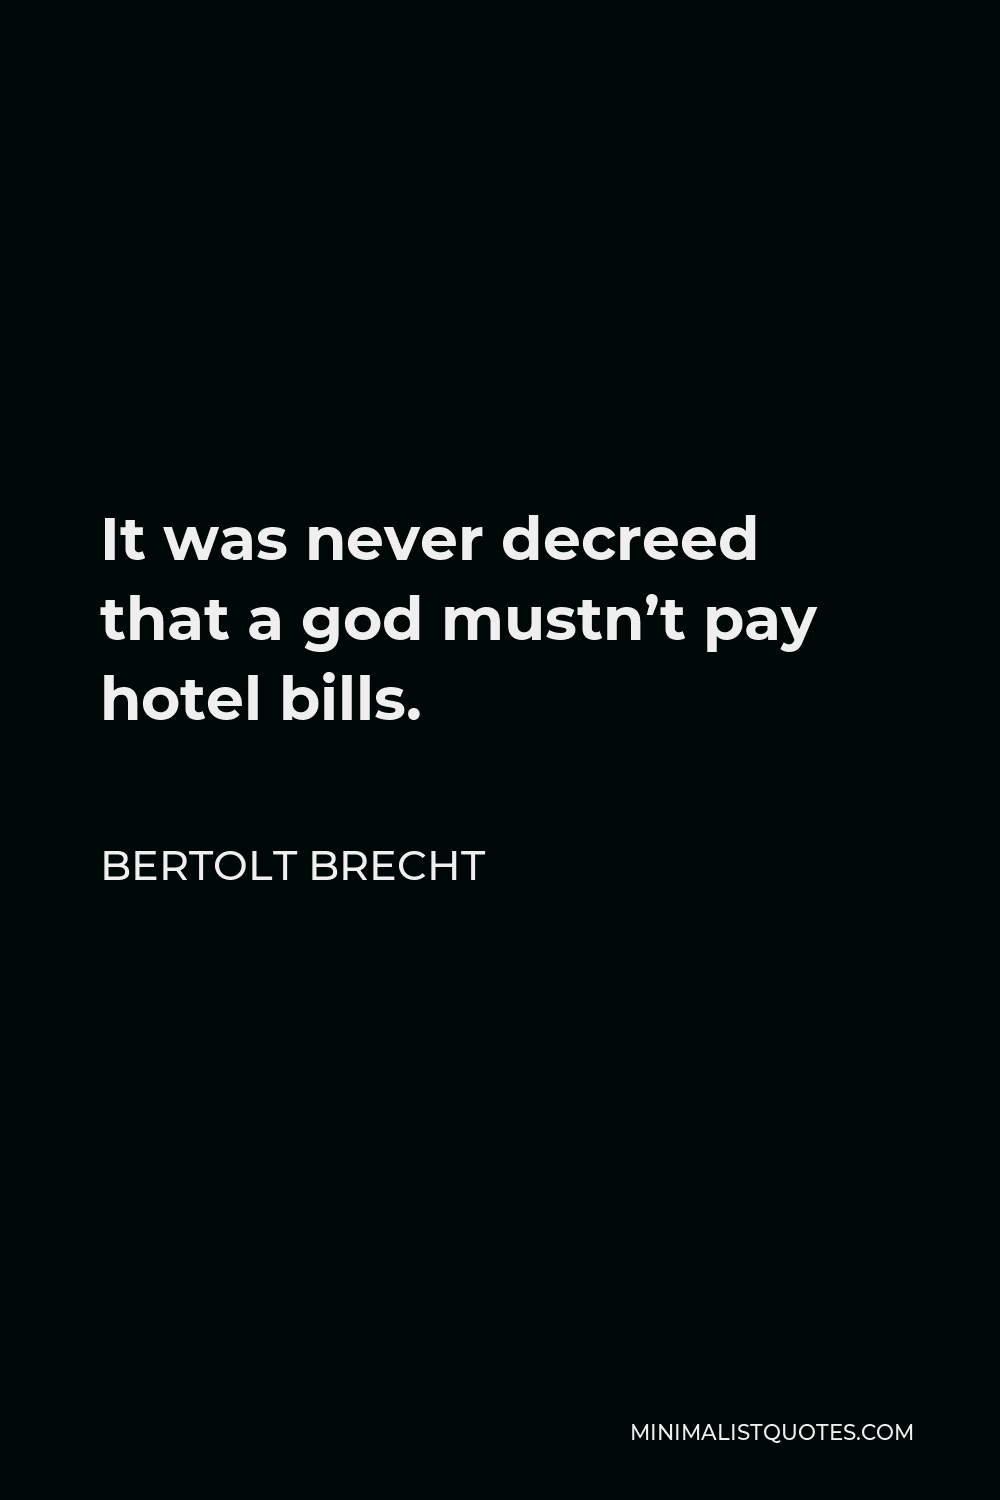 Bertolt Brecht Quote - It was never decreed that a god mustn’t pay hotel bills.